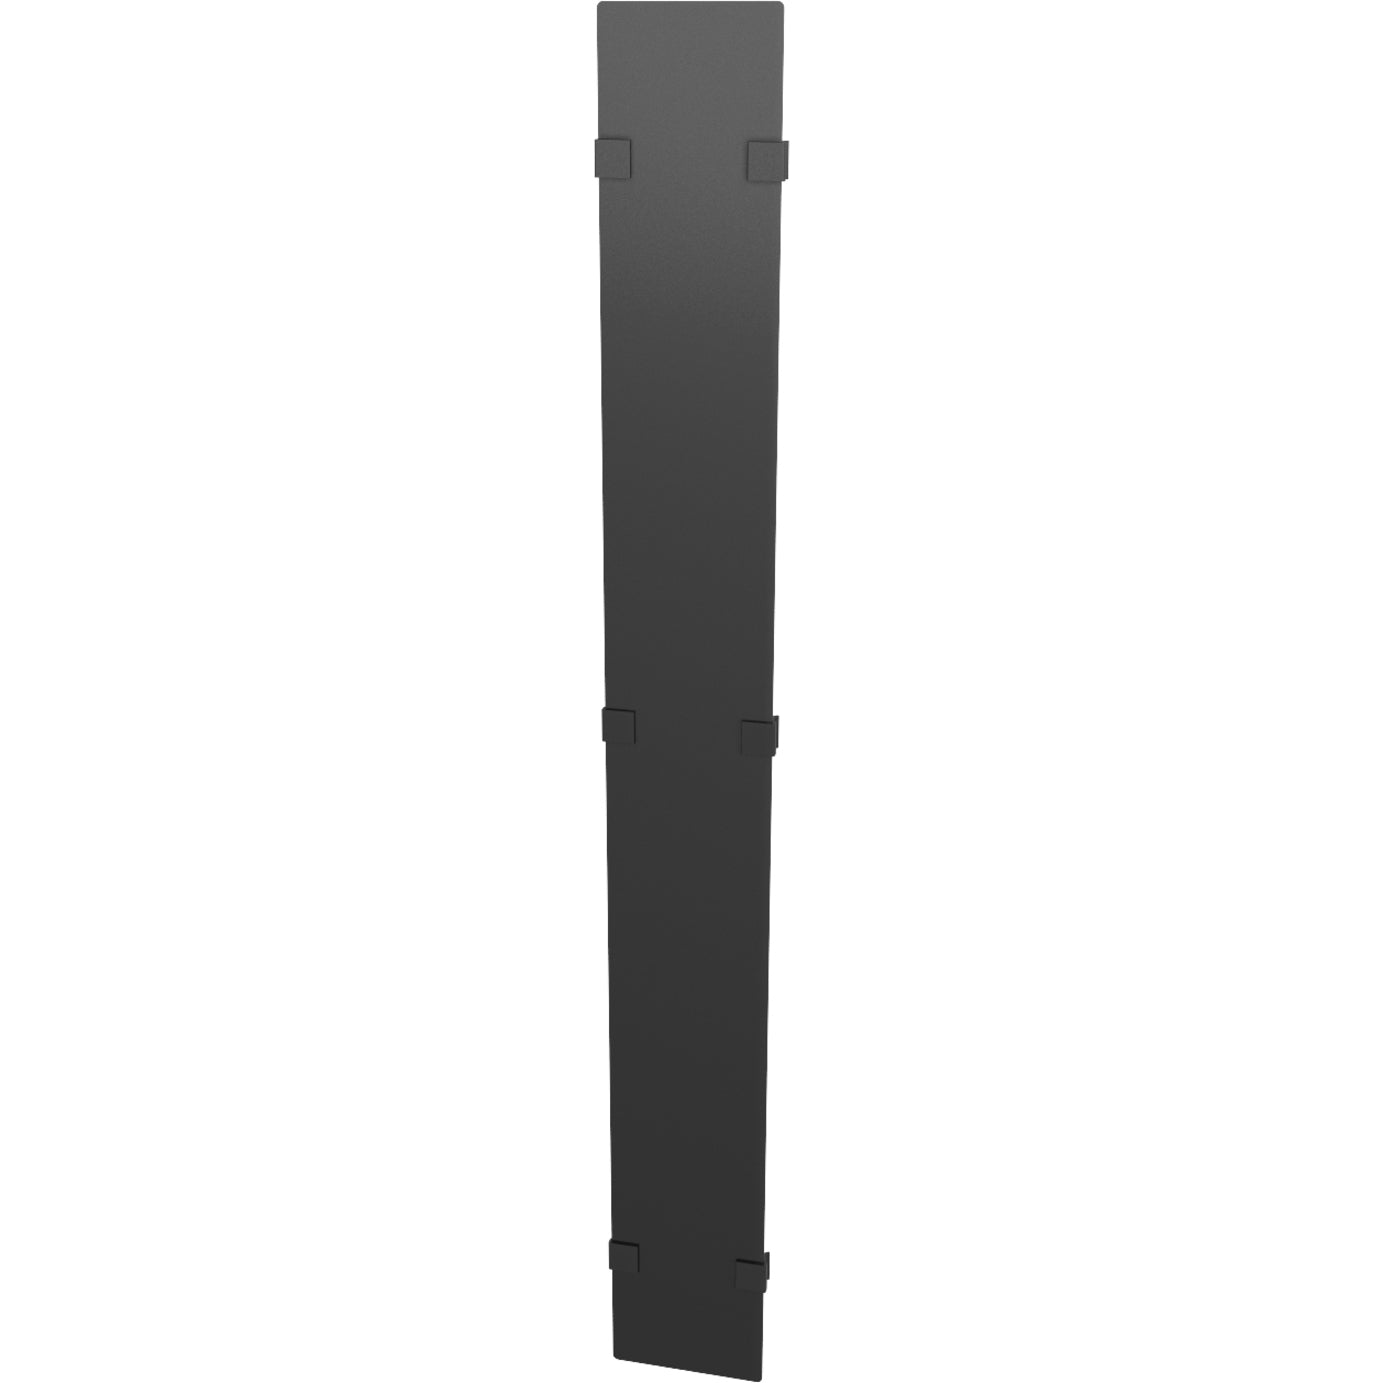 VERTIV VRA6002 42U x 800mm Wide Single Perforated Door Black, Compatible with Vertiv VR Rack